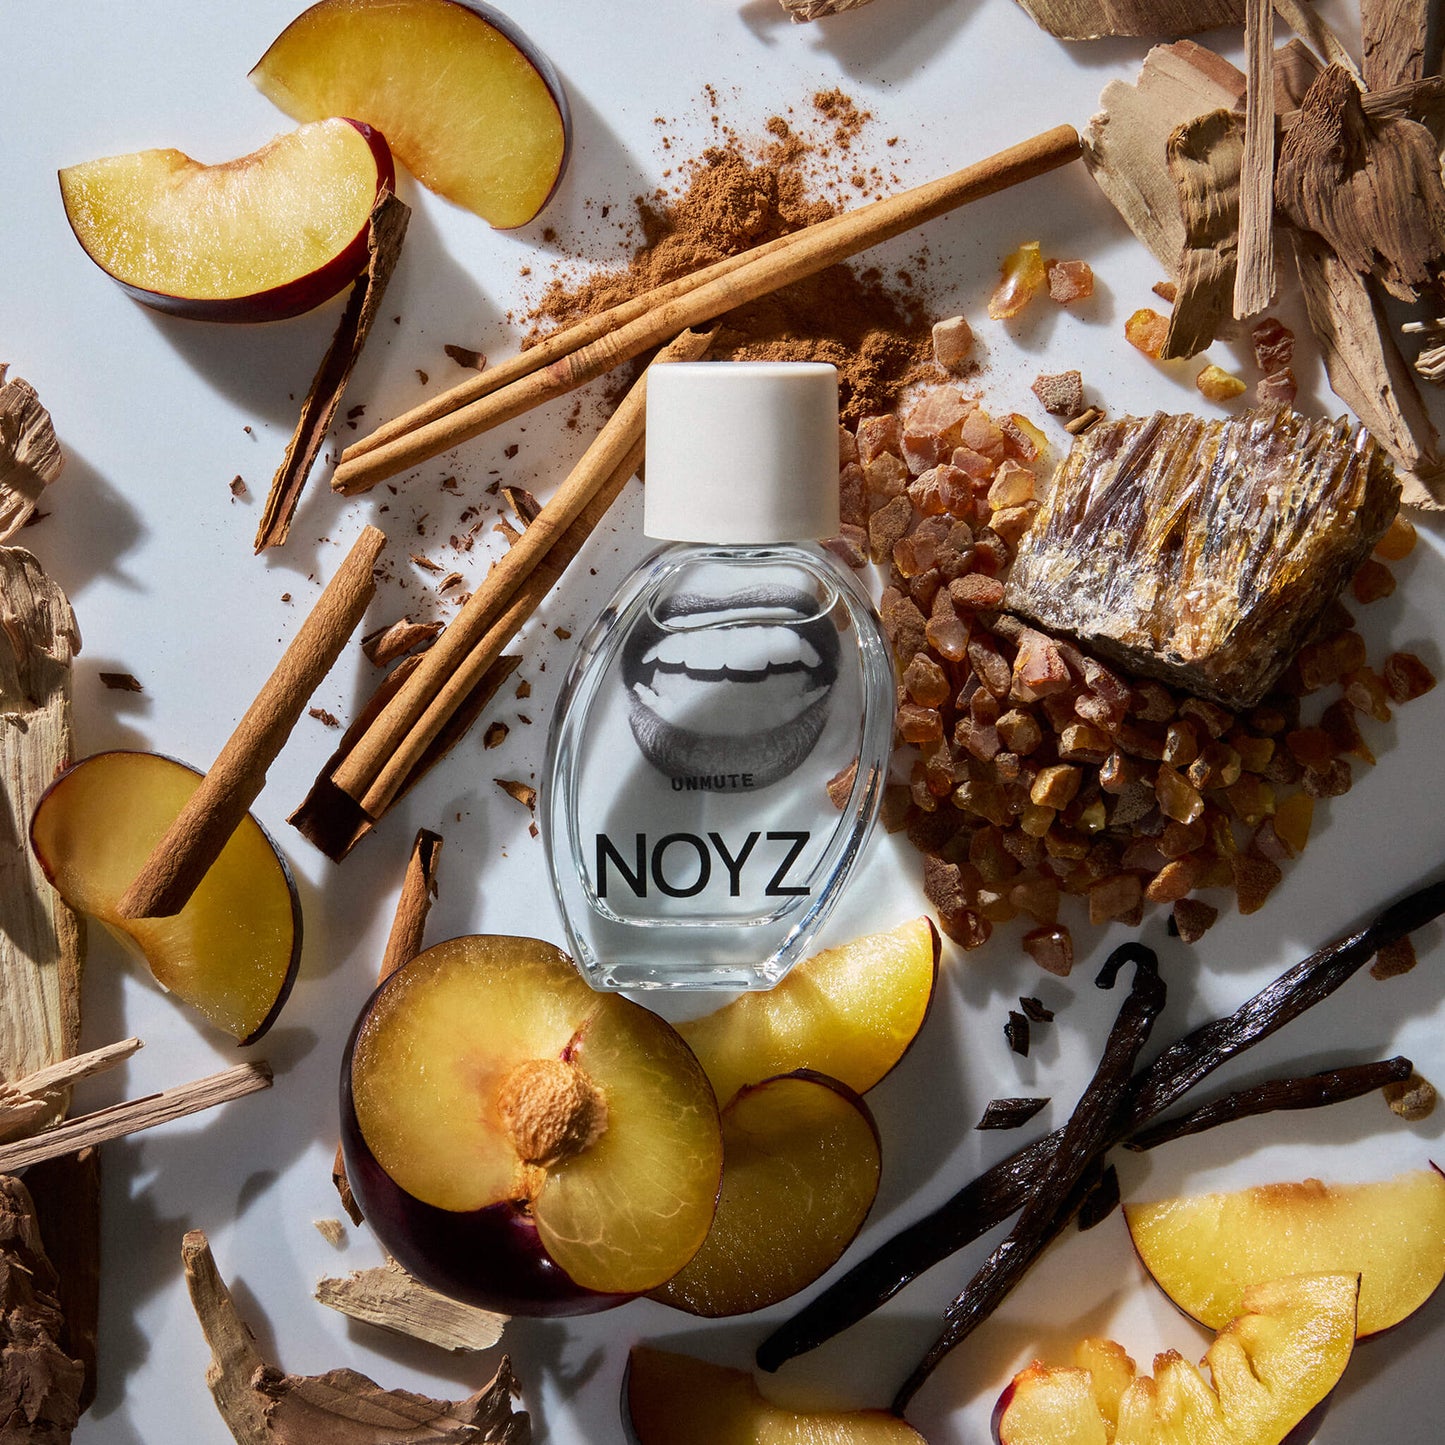 A bottle of NOYZ Unmute scent lays amidst vanilla sticks, Spanish ciste and black plums